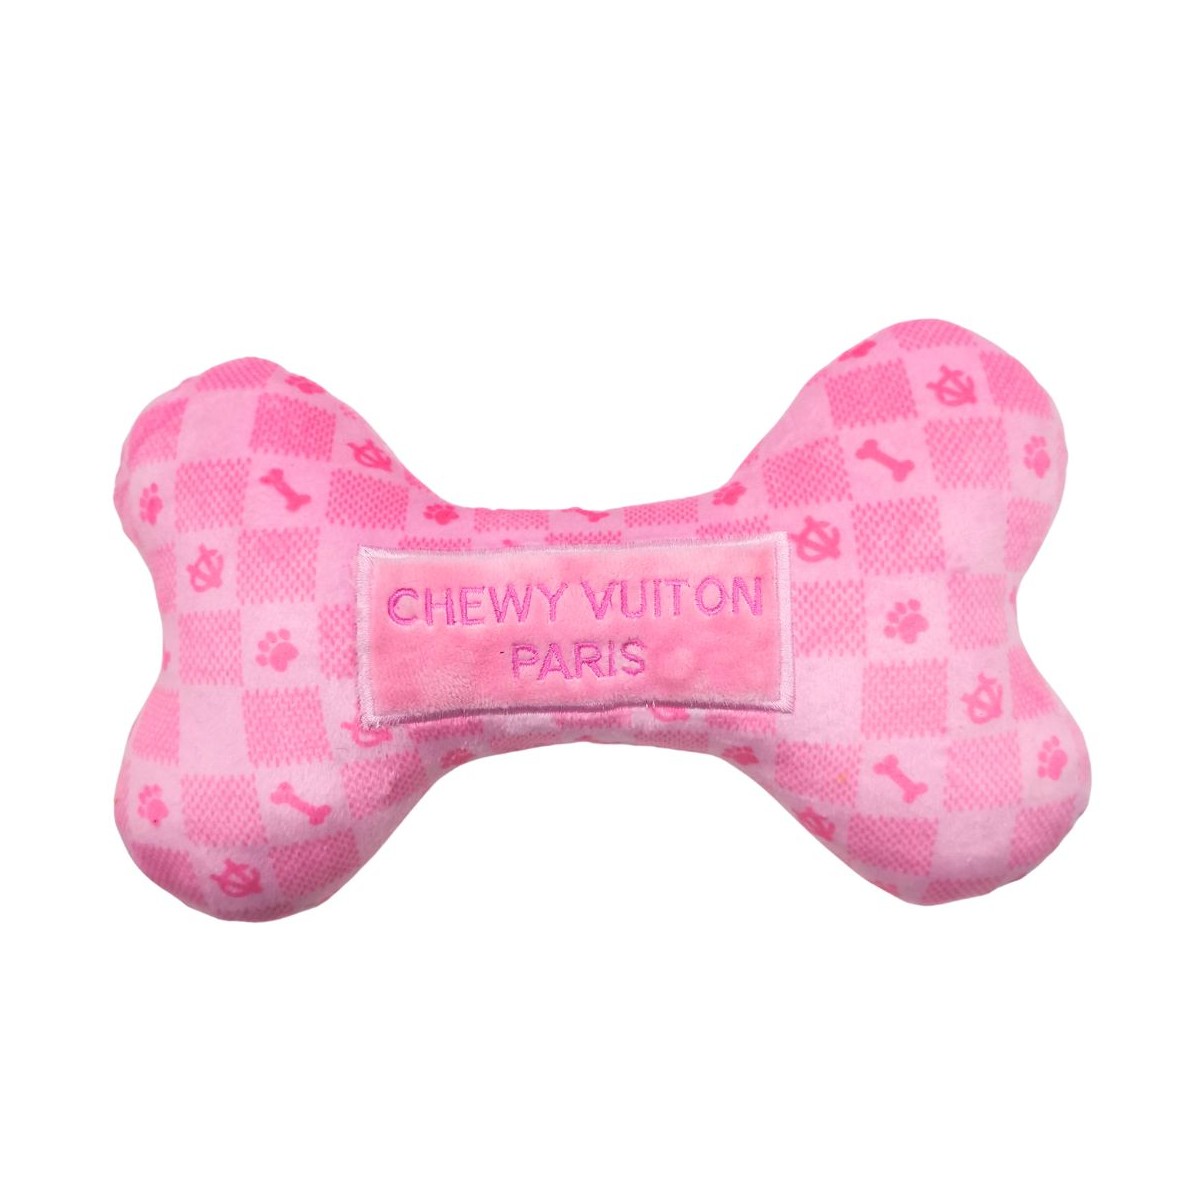 Haute Diggity Dog Chewy Vuiton Bone Dog Toy - Pink Checker